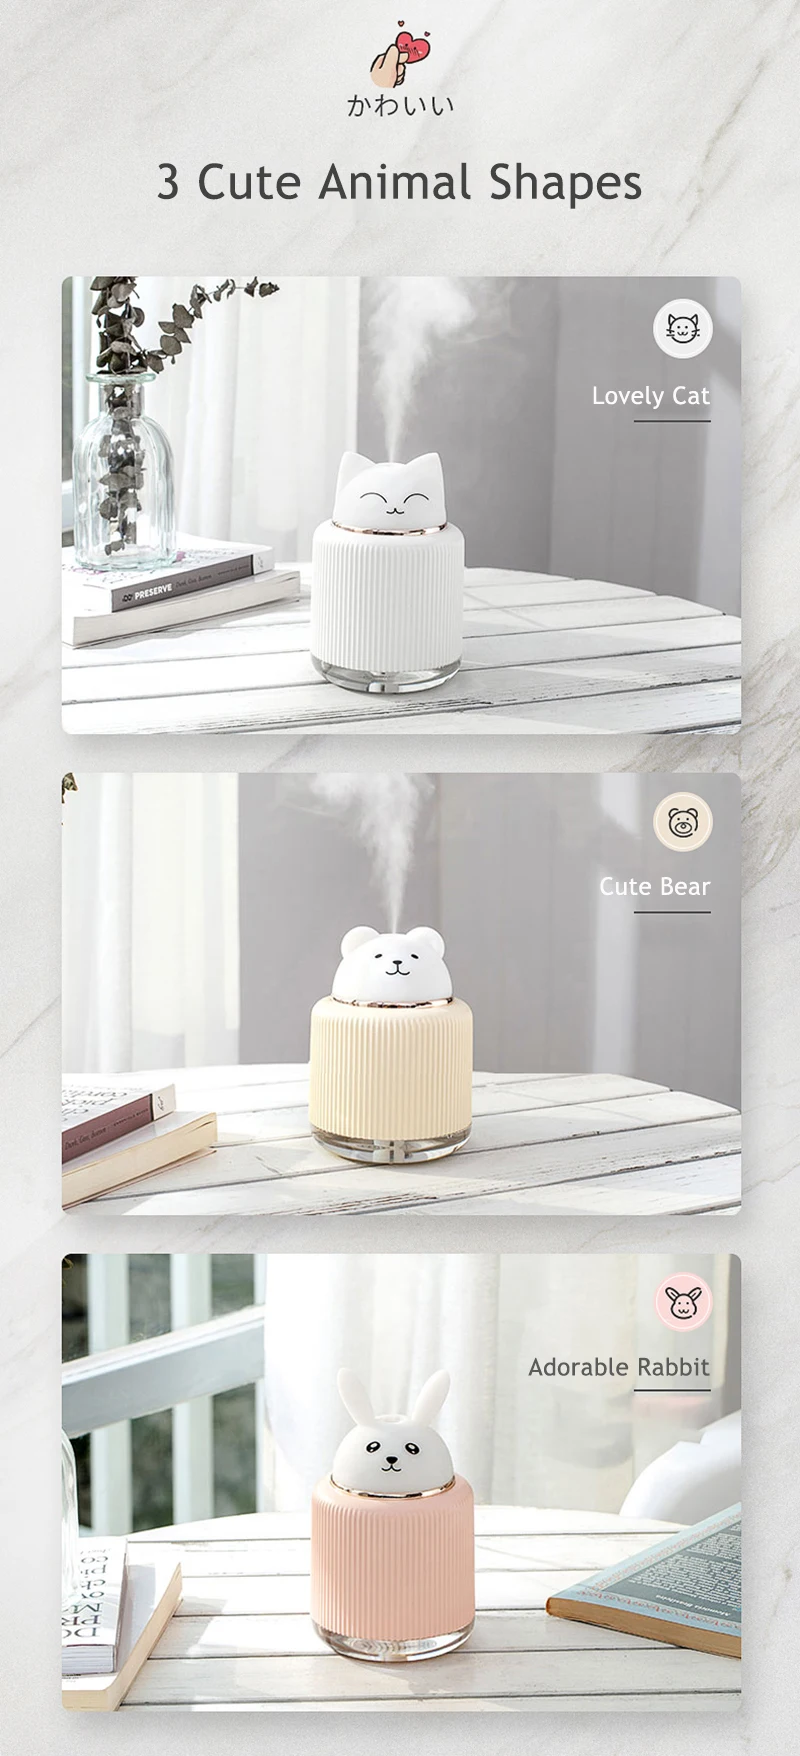 300ML USB Portable Air Humidifier Ultrasonic Aroma Oil Essential Diffuser LED Light Cute Cat Bear Mist Maker For Home Car